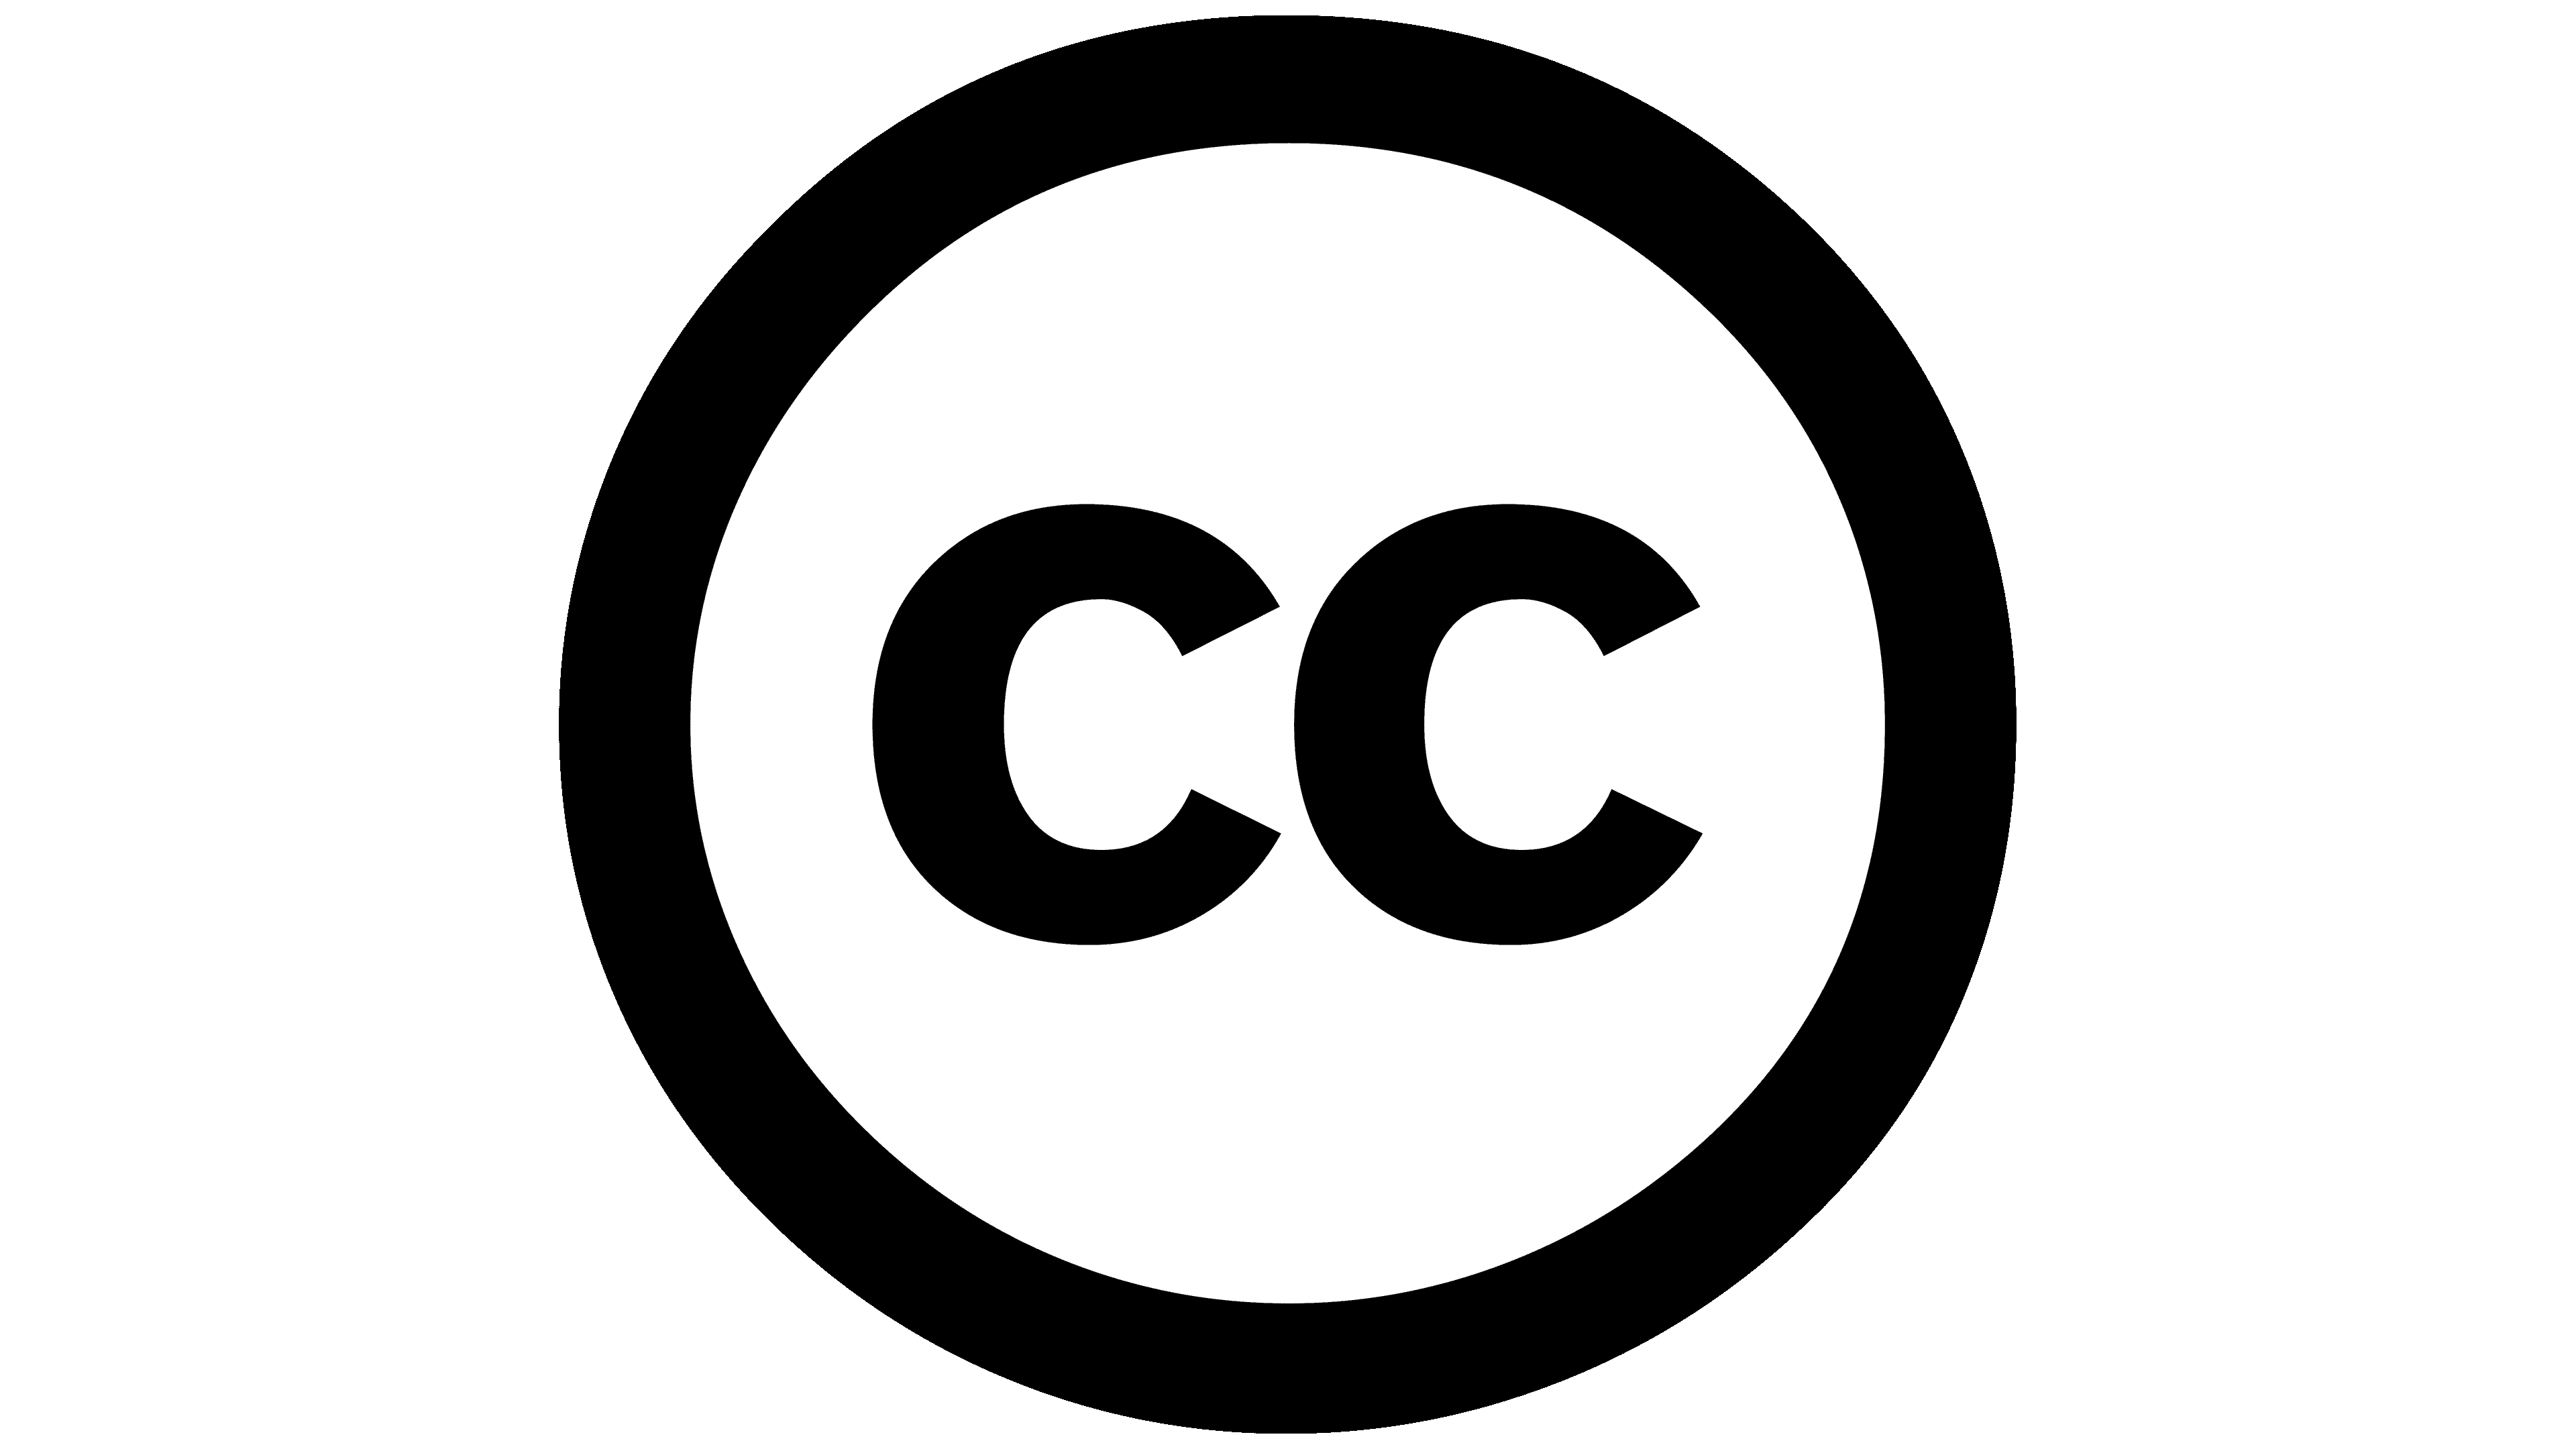 Cc by sa. Creative Commons знак. Логотип cc. Лицензии Creative Commons.